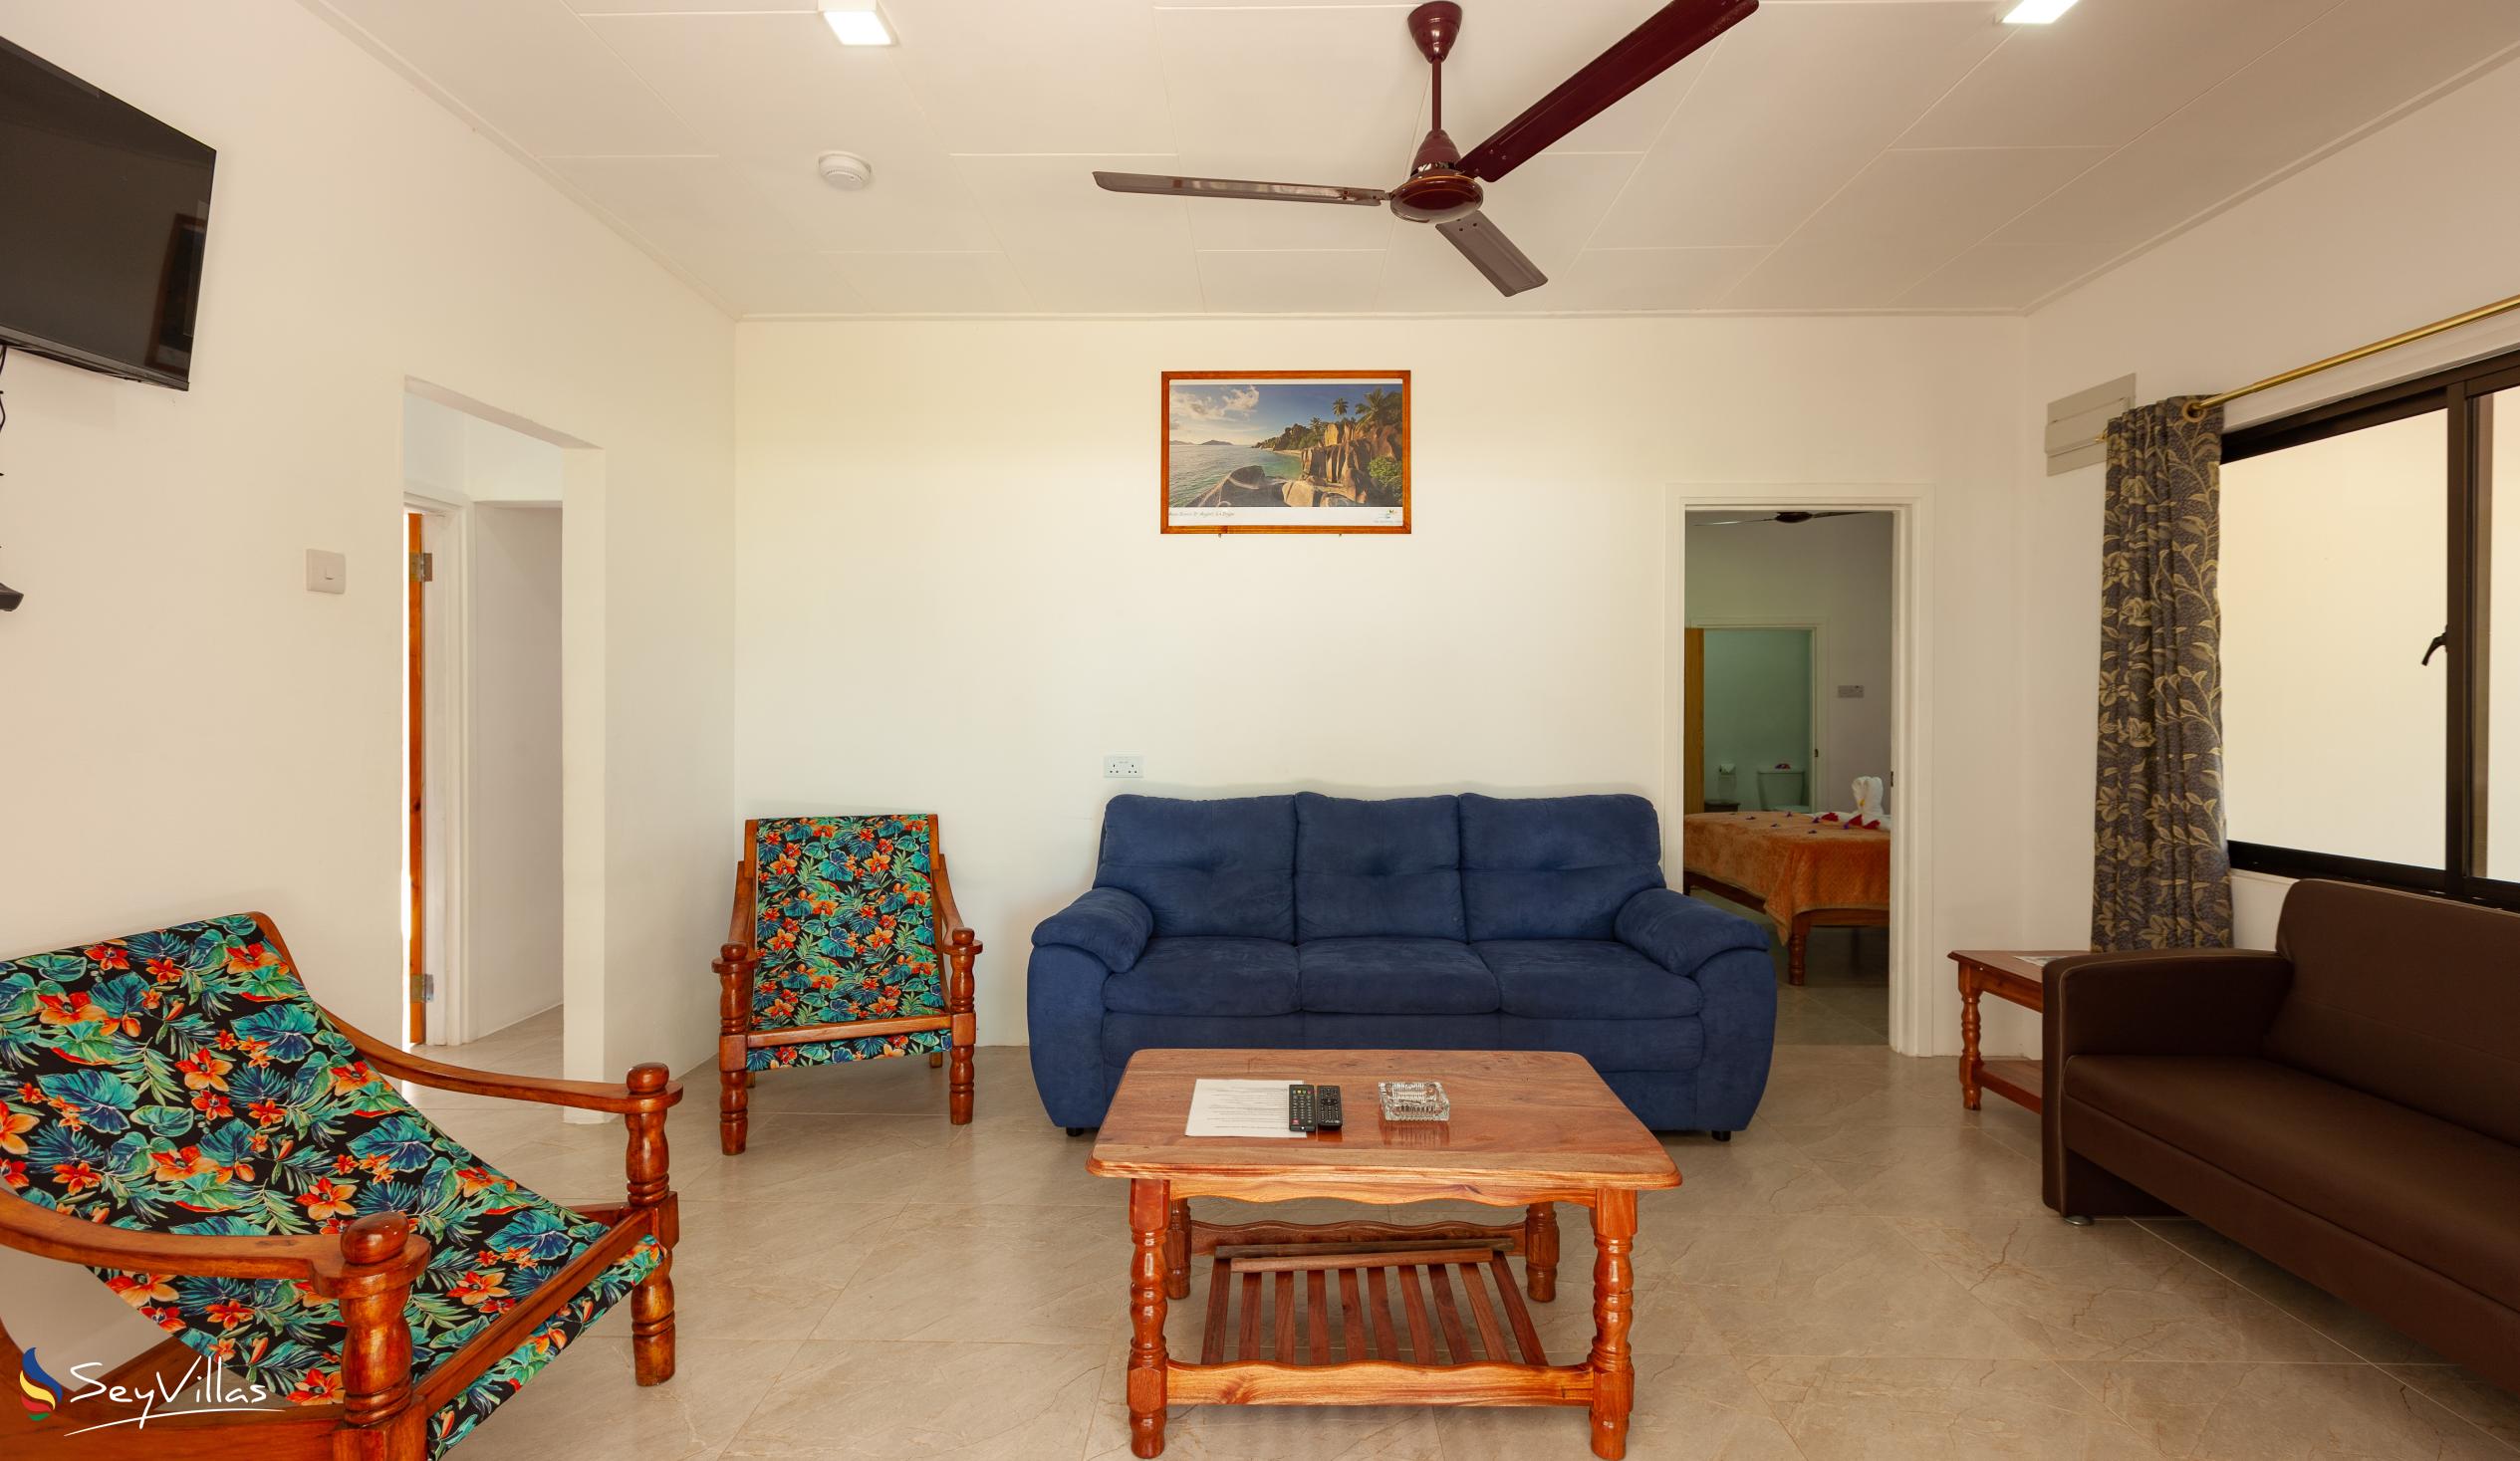 Foto 45: Anse Grosse Roche Beach Villa - Familienappartement mit 2 Schlafzimmern - La Digue (Seychellen)